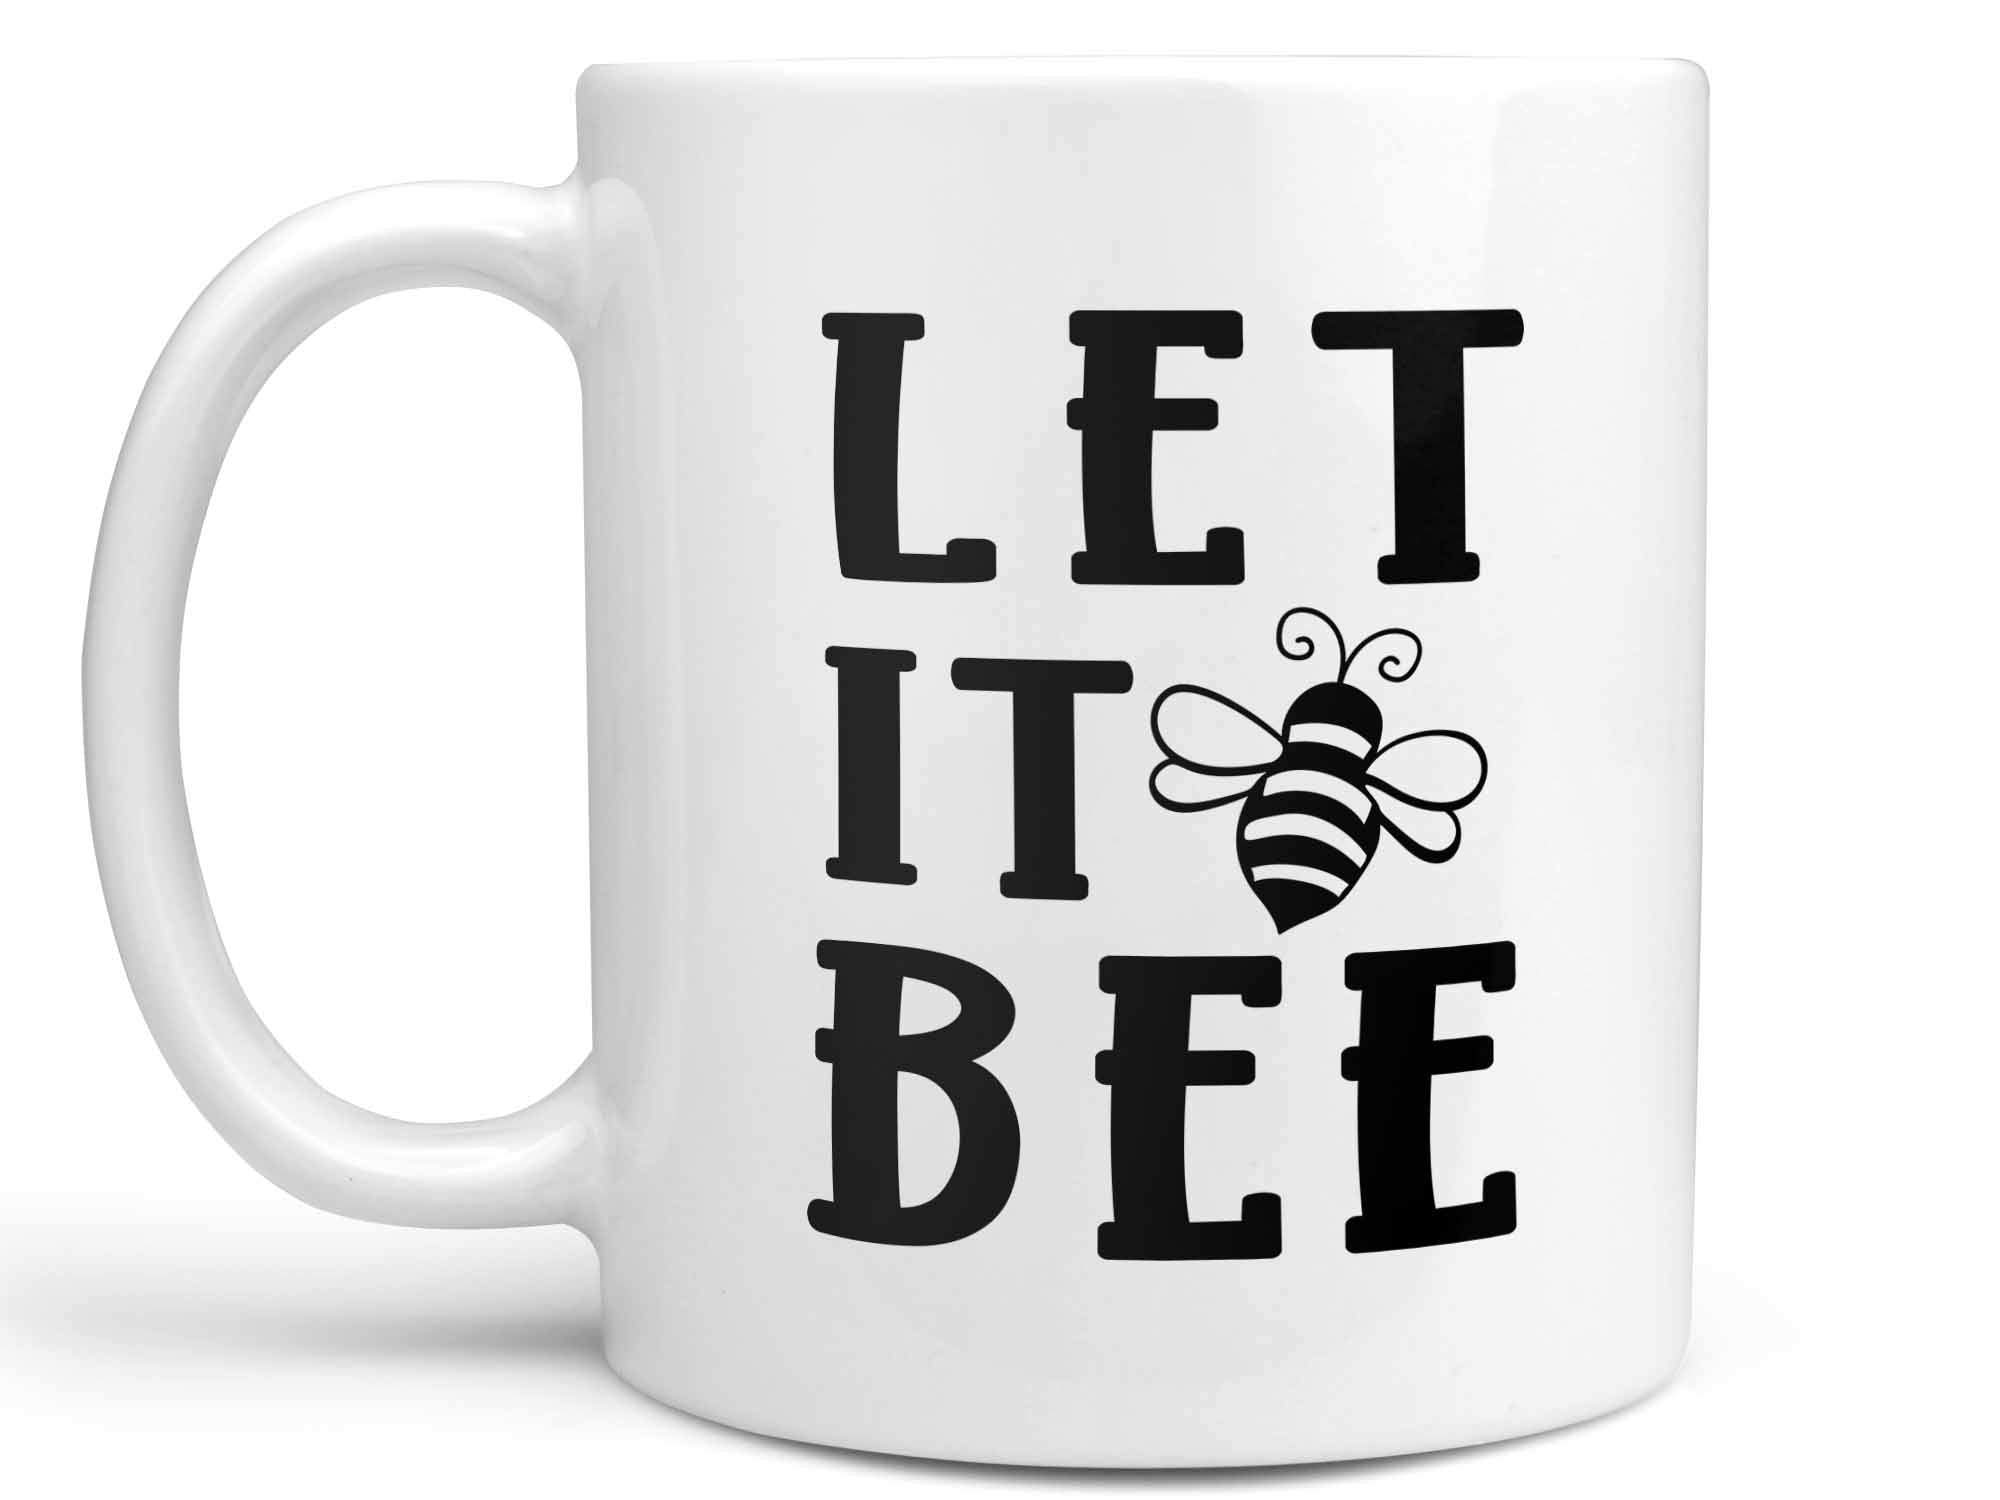 Let it Bee Coffee Mug